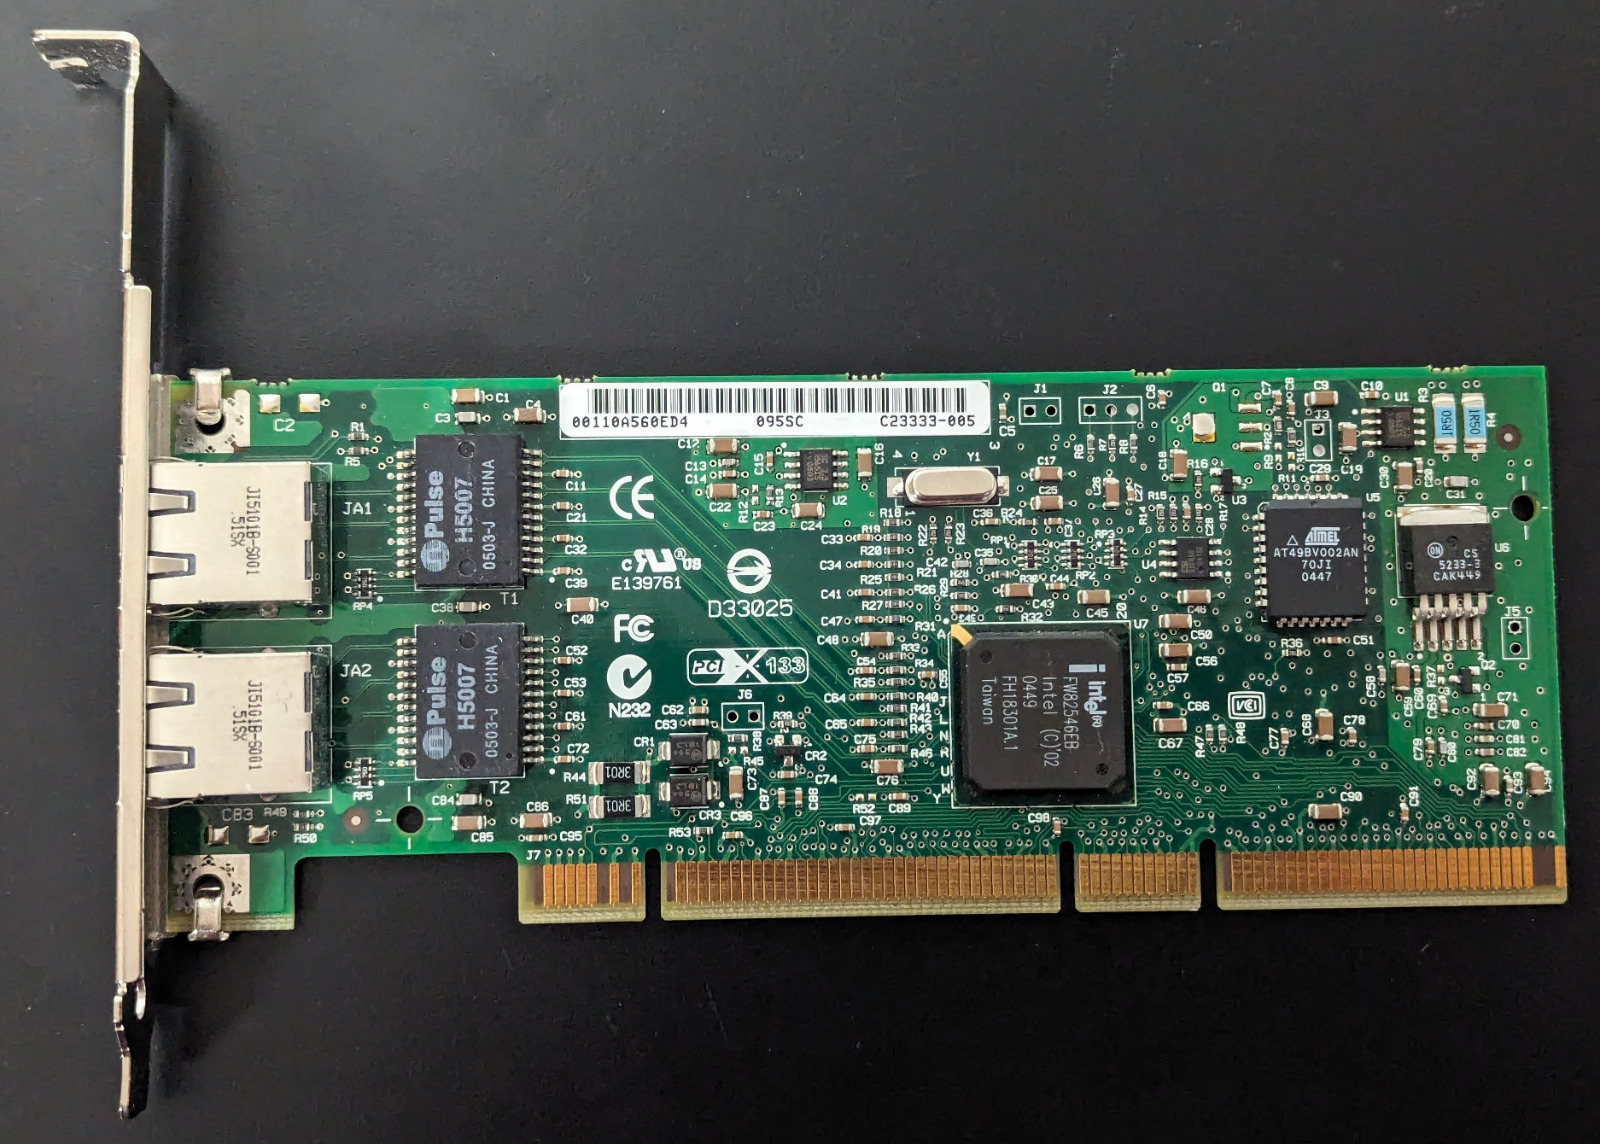 HP NC7170 Intel Pro/1000 MT PCI-X Dual Port Server Network Card 1 Gbps Adapter